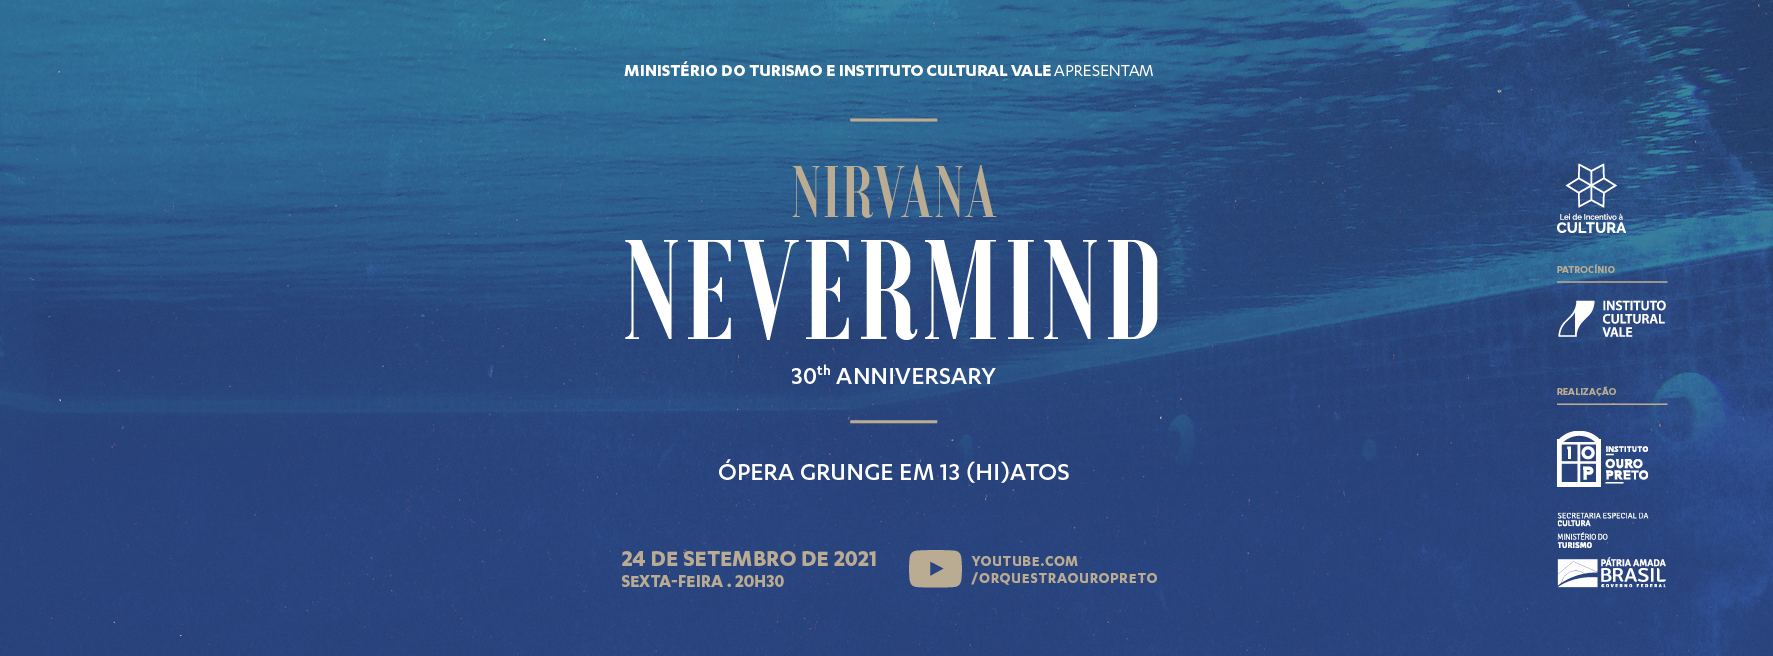 Nirvana: Nevermind 30th